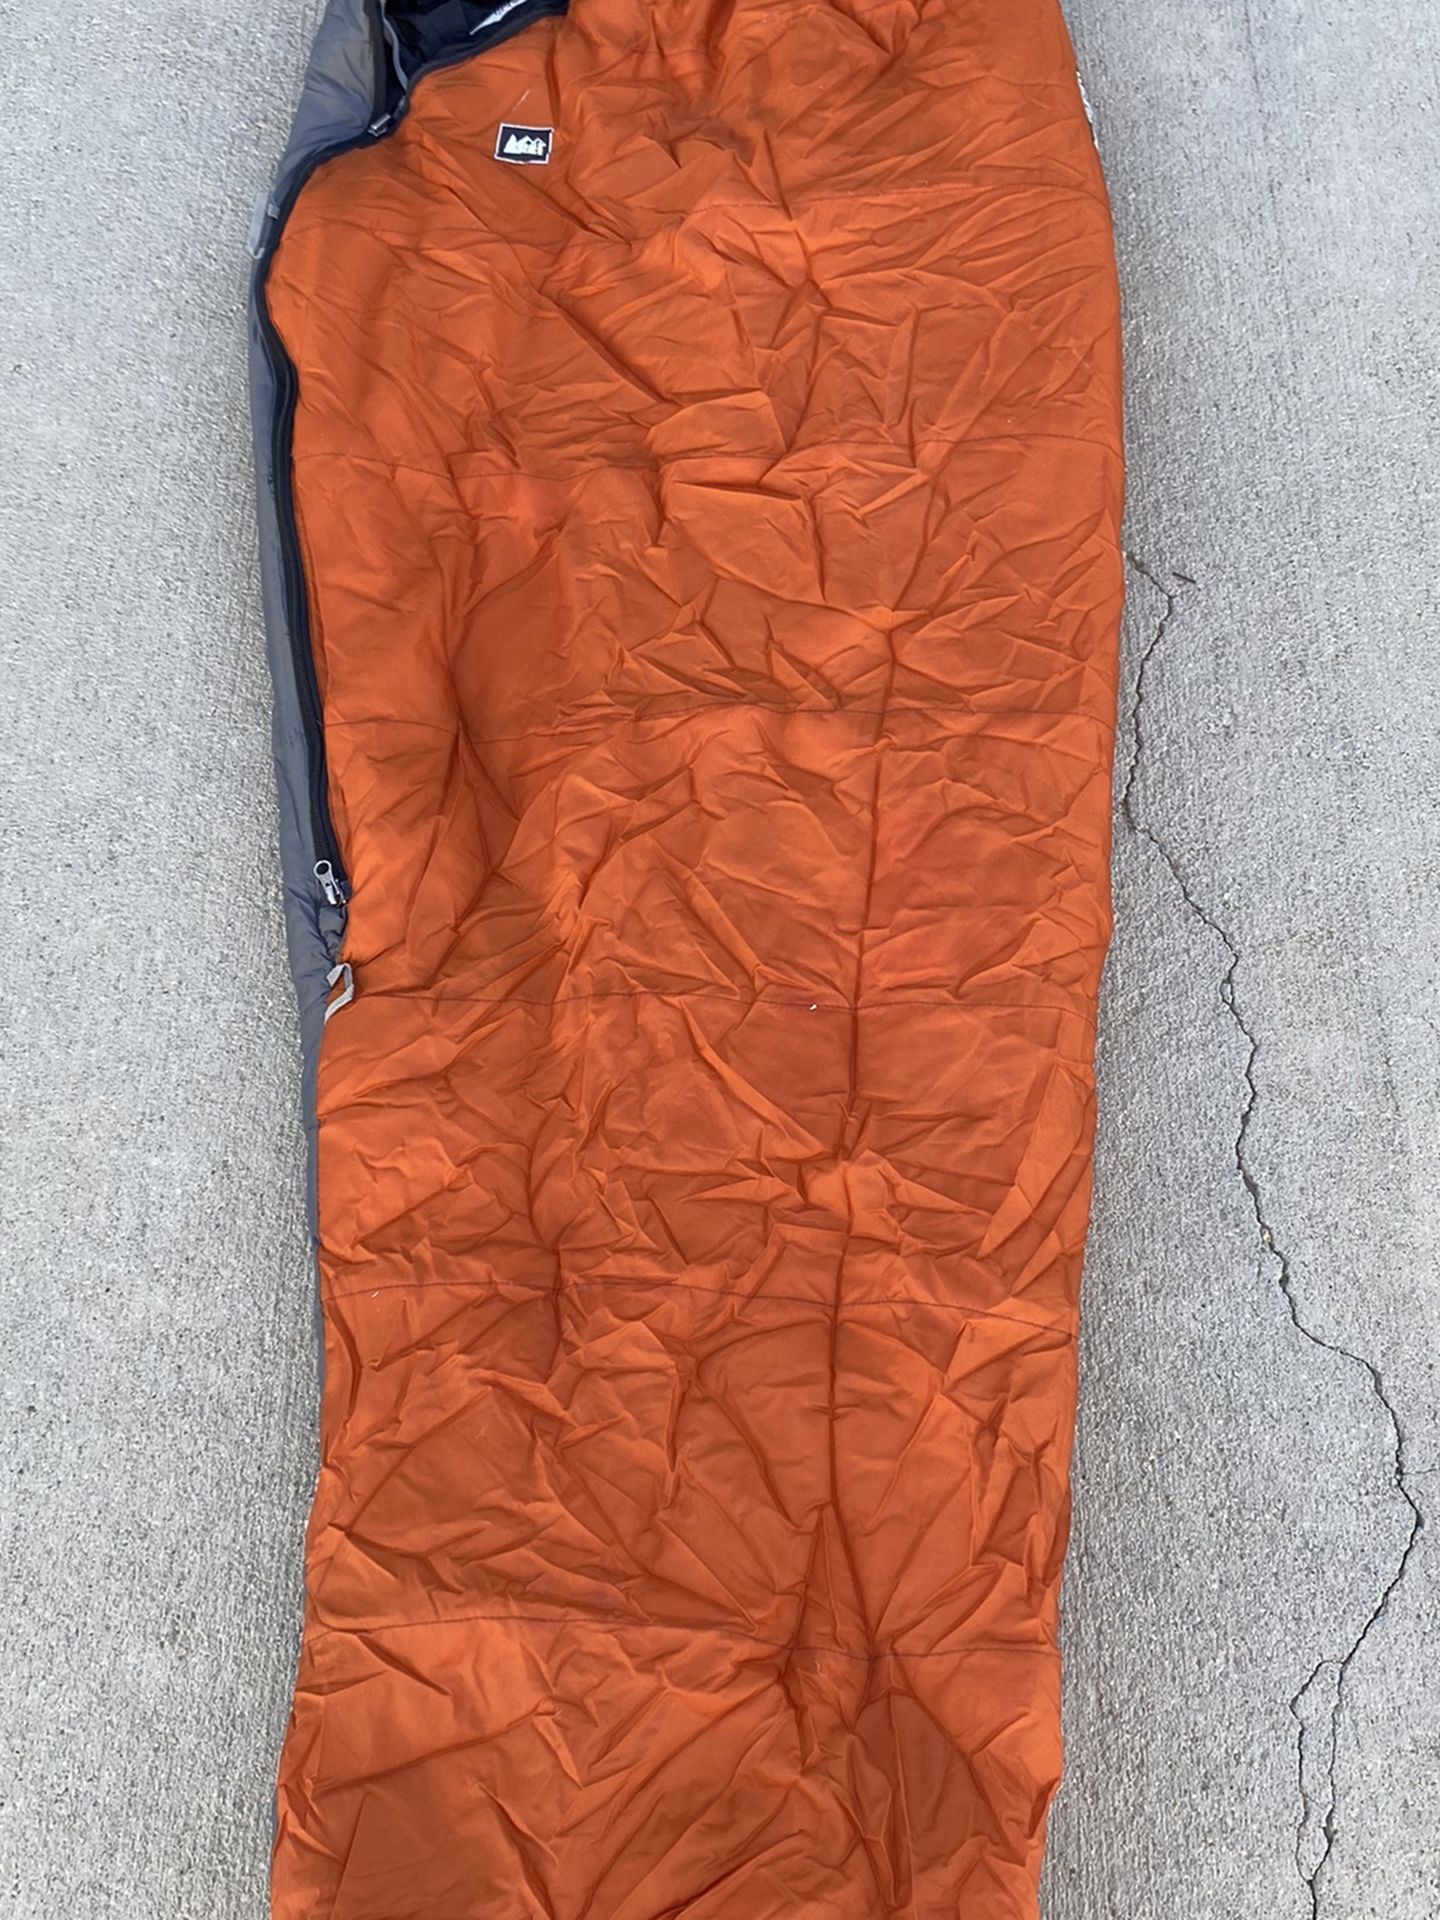 Sleeping Bag/ Camping